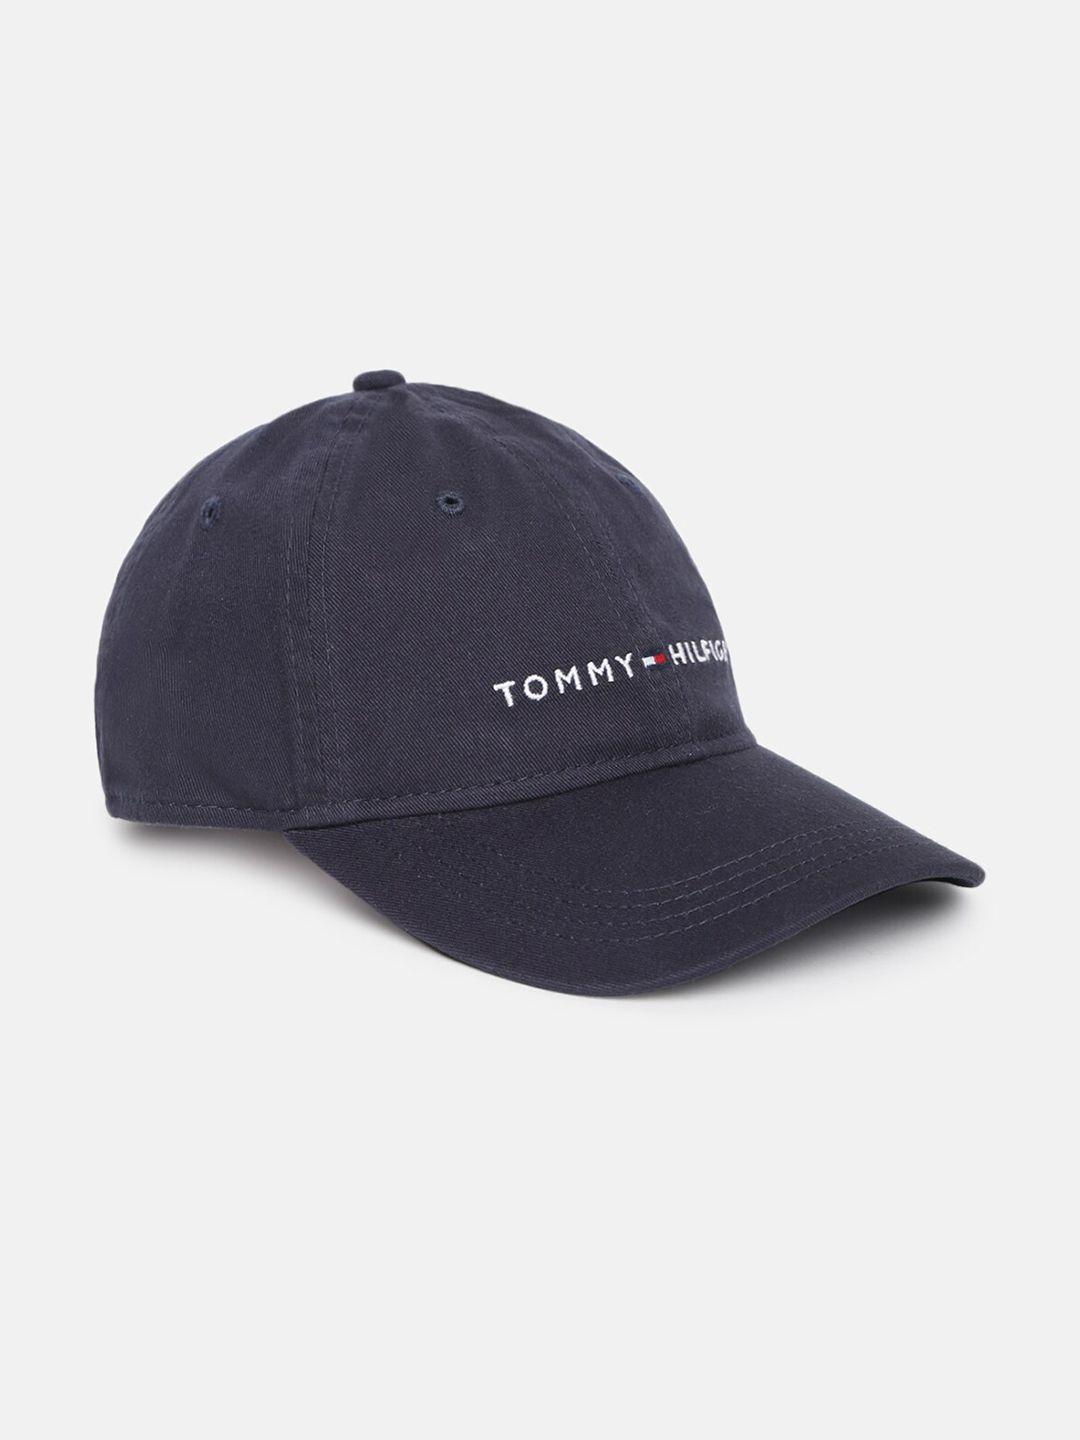 tommy-hilfiger-men-cotton-baseball-cap